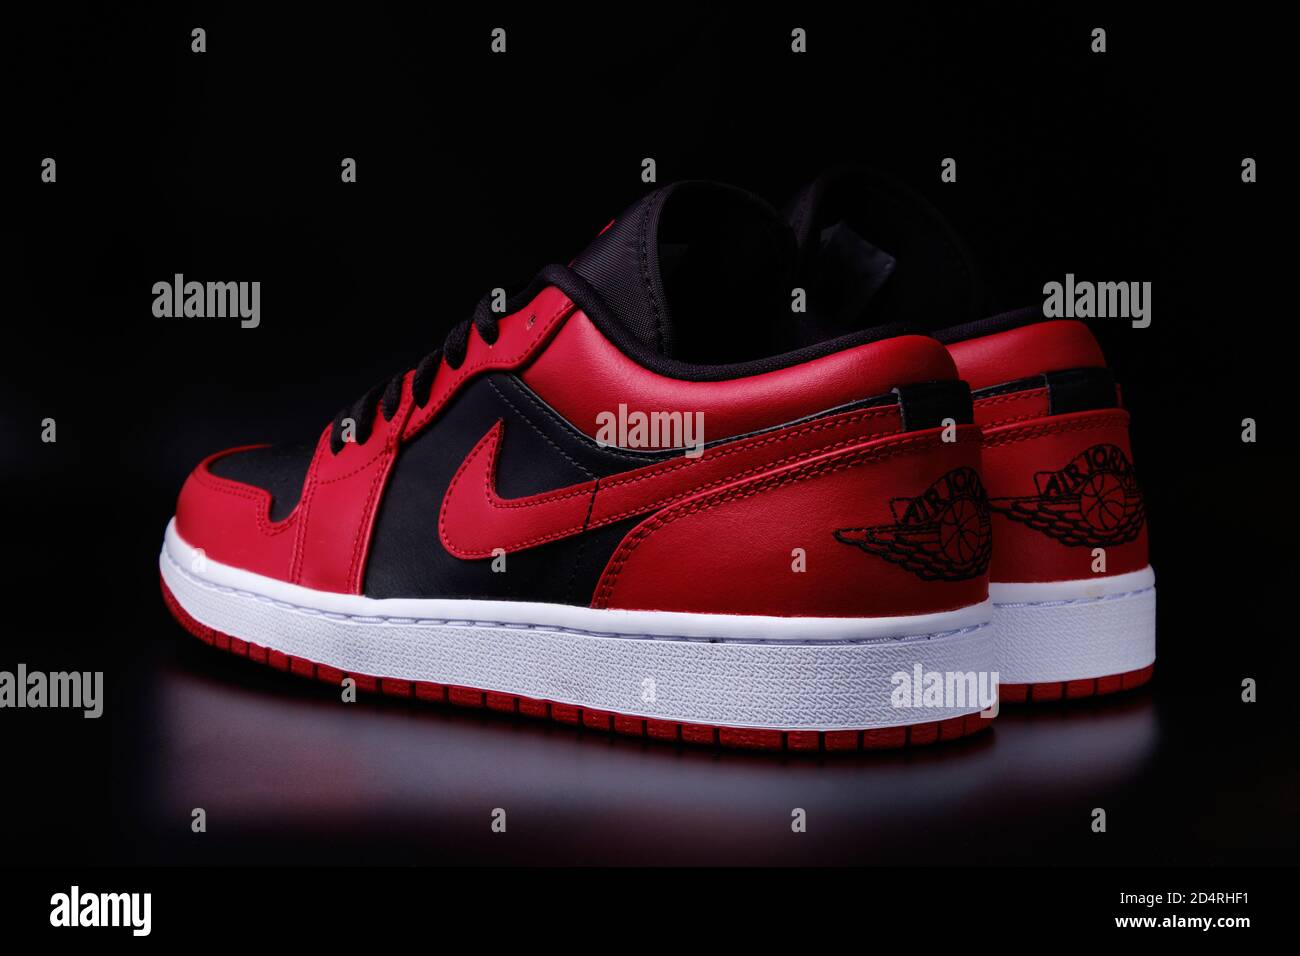 Nike Air Jordan 1 Fotos e Imágenes de stock - Alamy